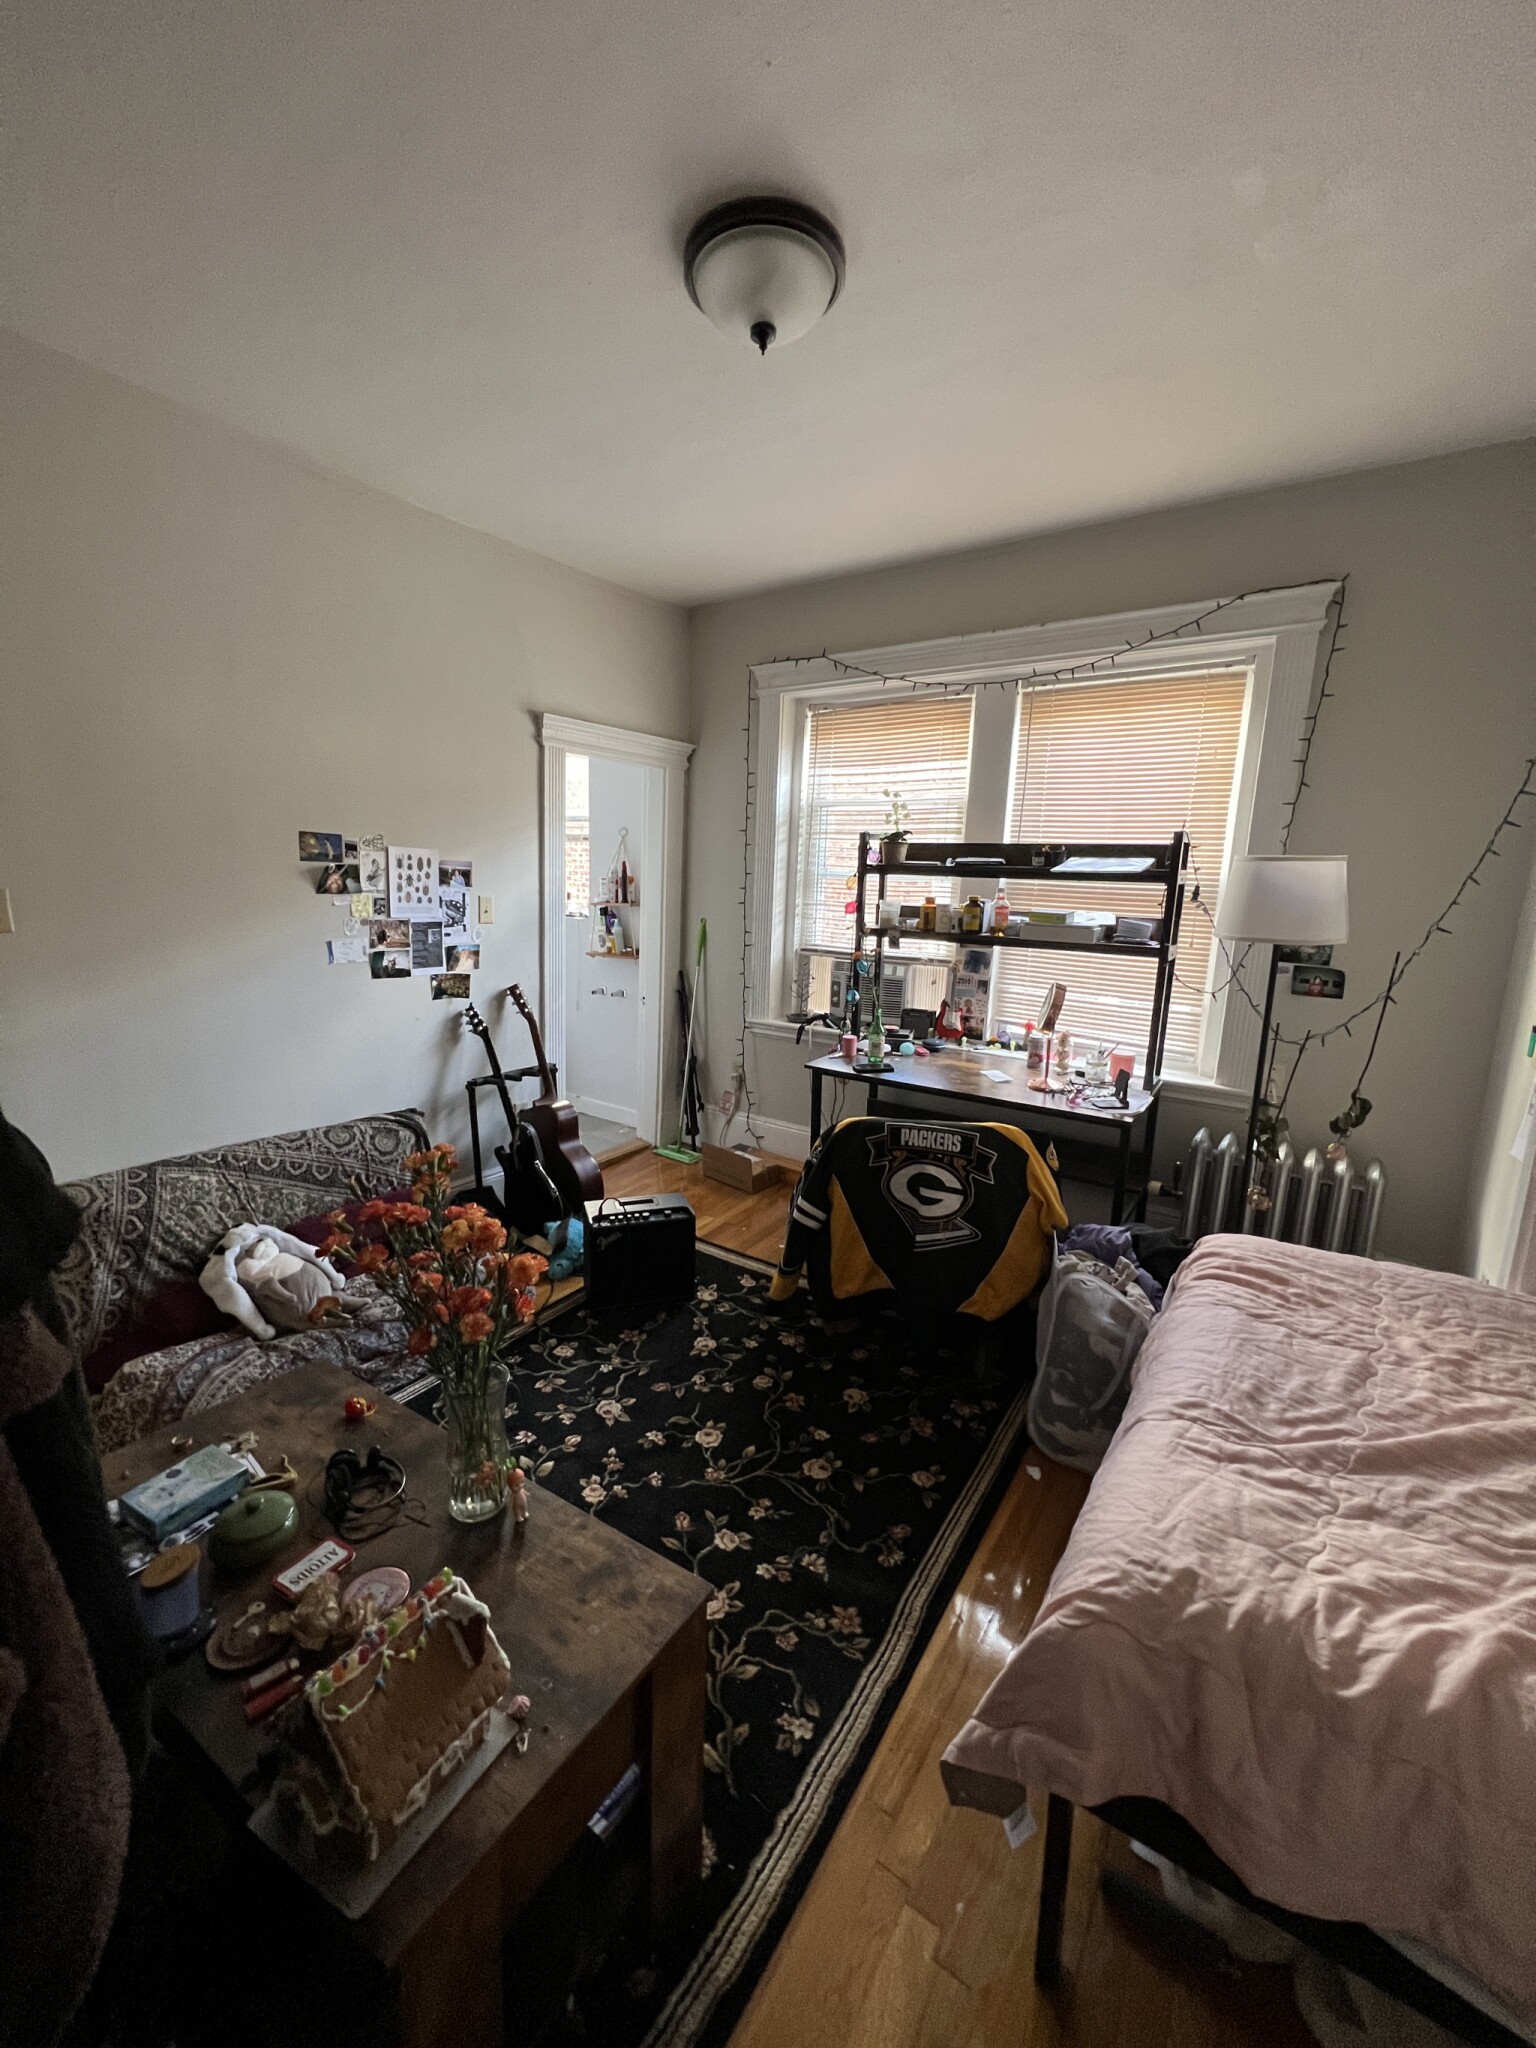 Photos of apartment on Huntington Ave. - commercial,Boston MA 02115